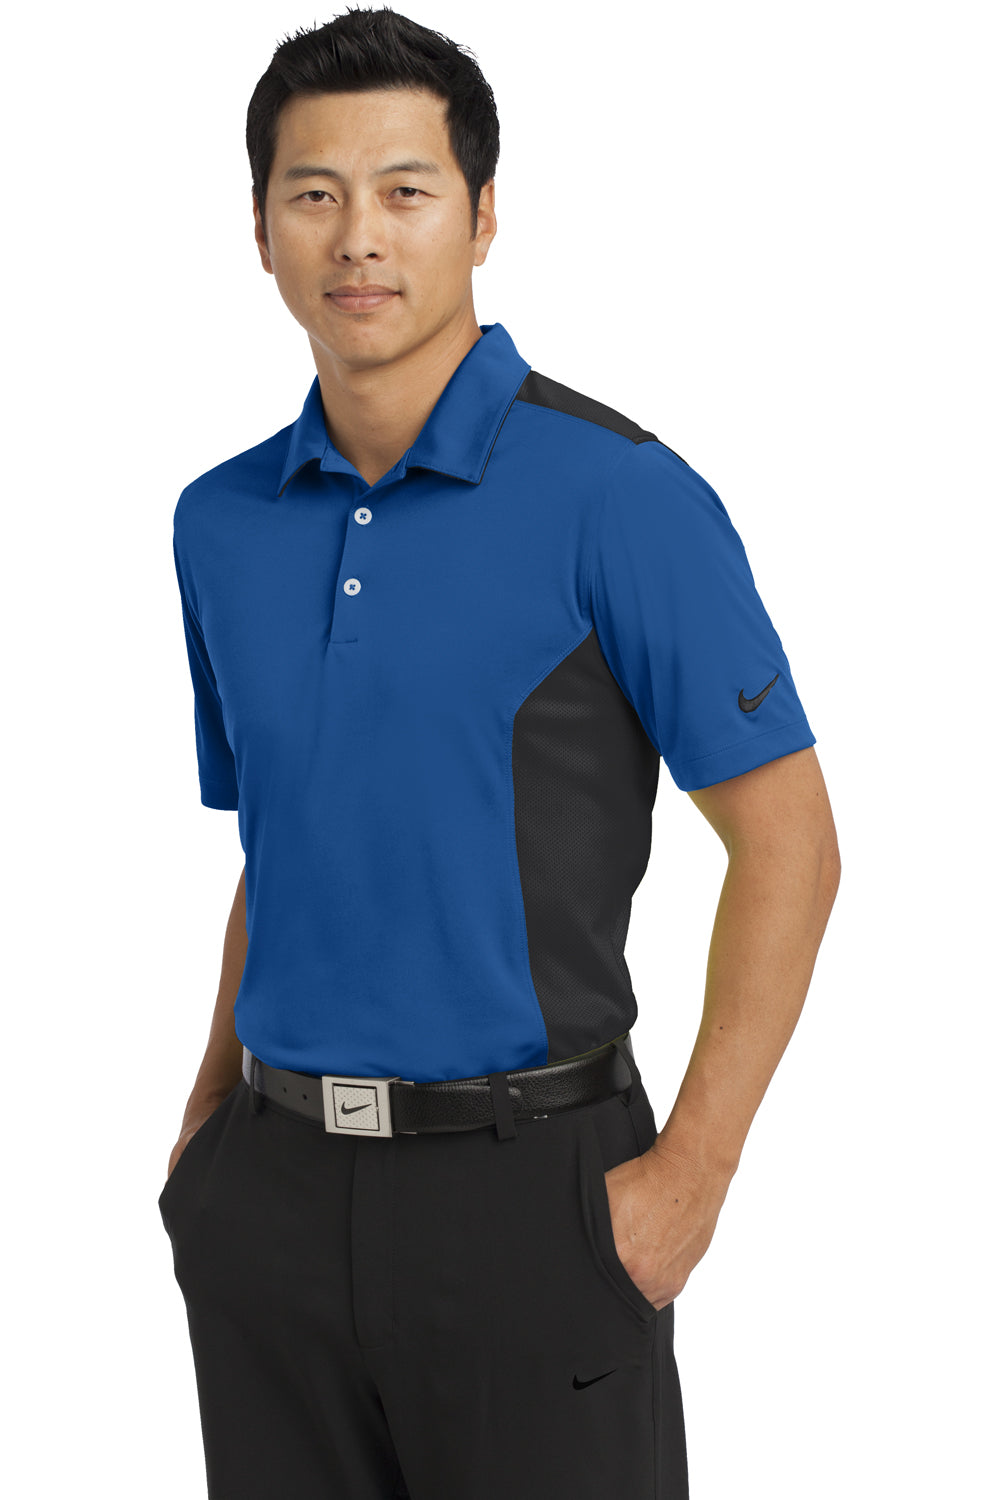 Nike 632418 Mens Dri-Fit Moisture Wicking Short Sleeve Polo Shirt Royal Blue/Black Side